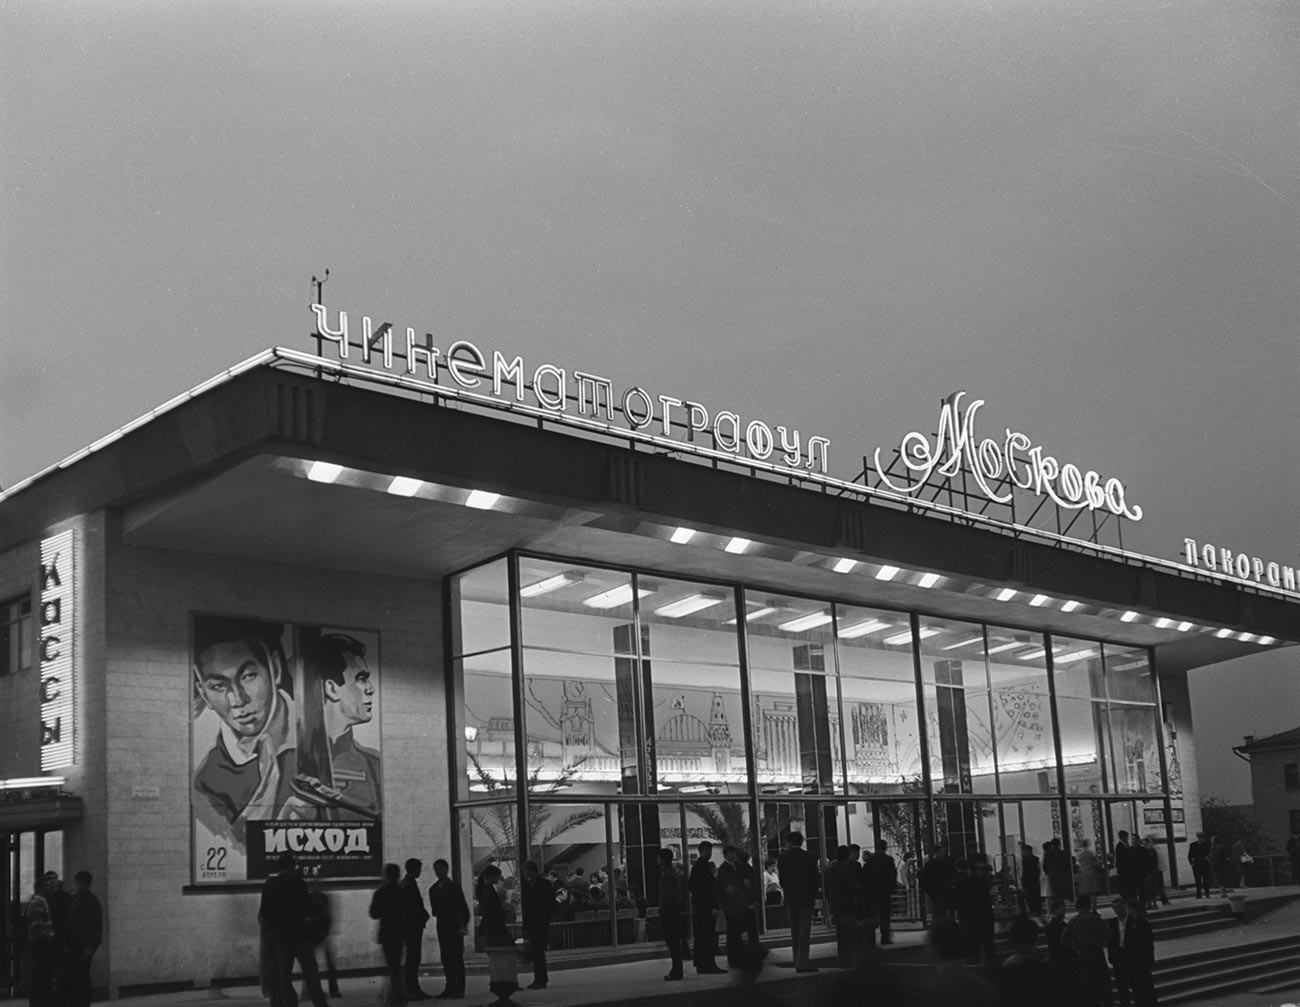 Moskowa Kino in Chișinău, 1968